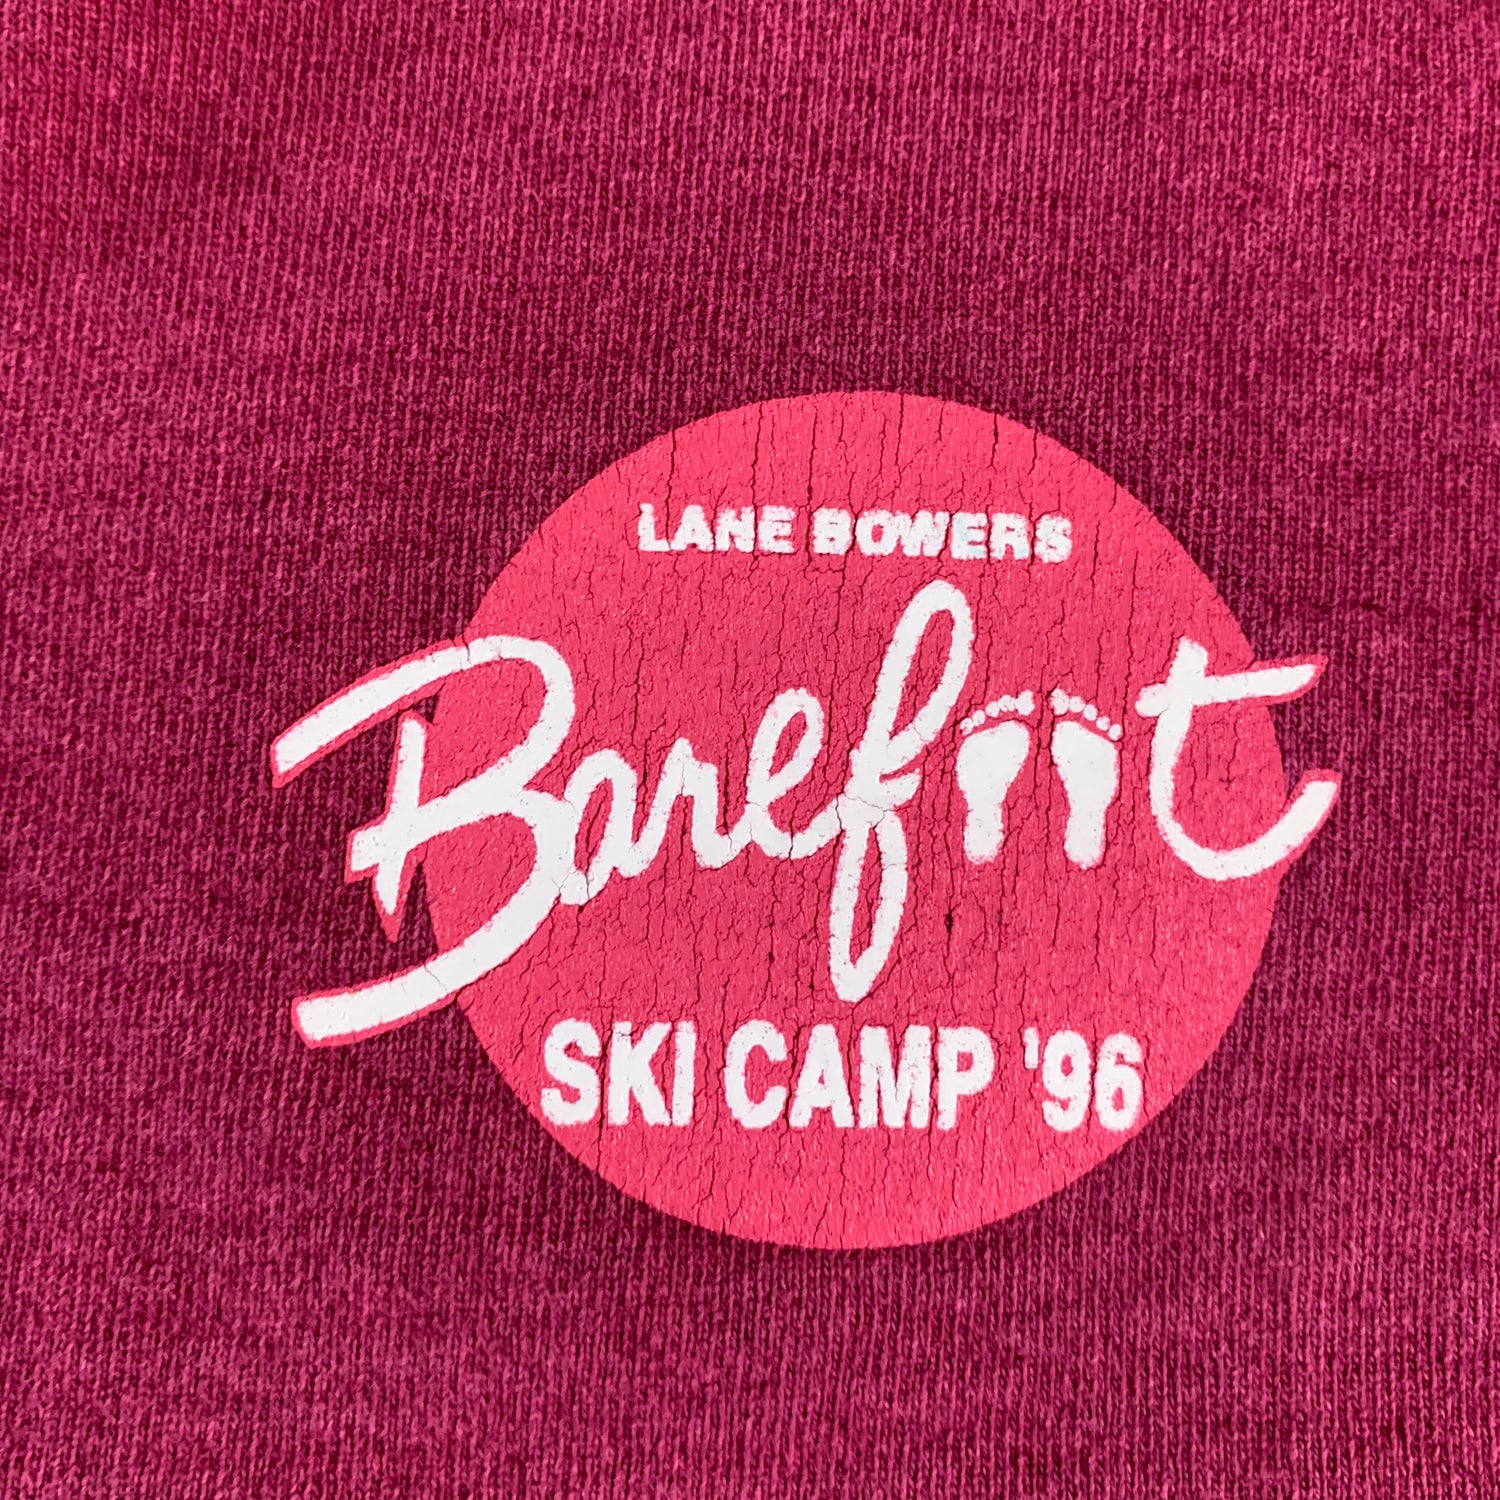 Vintage 1996 Ski Camp Sweatshirt size XL